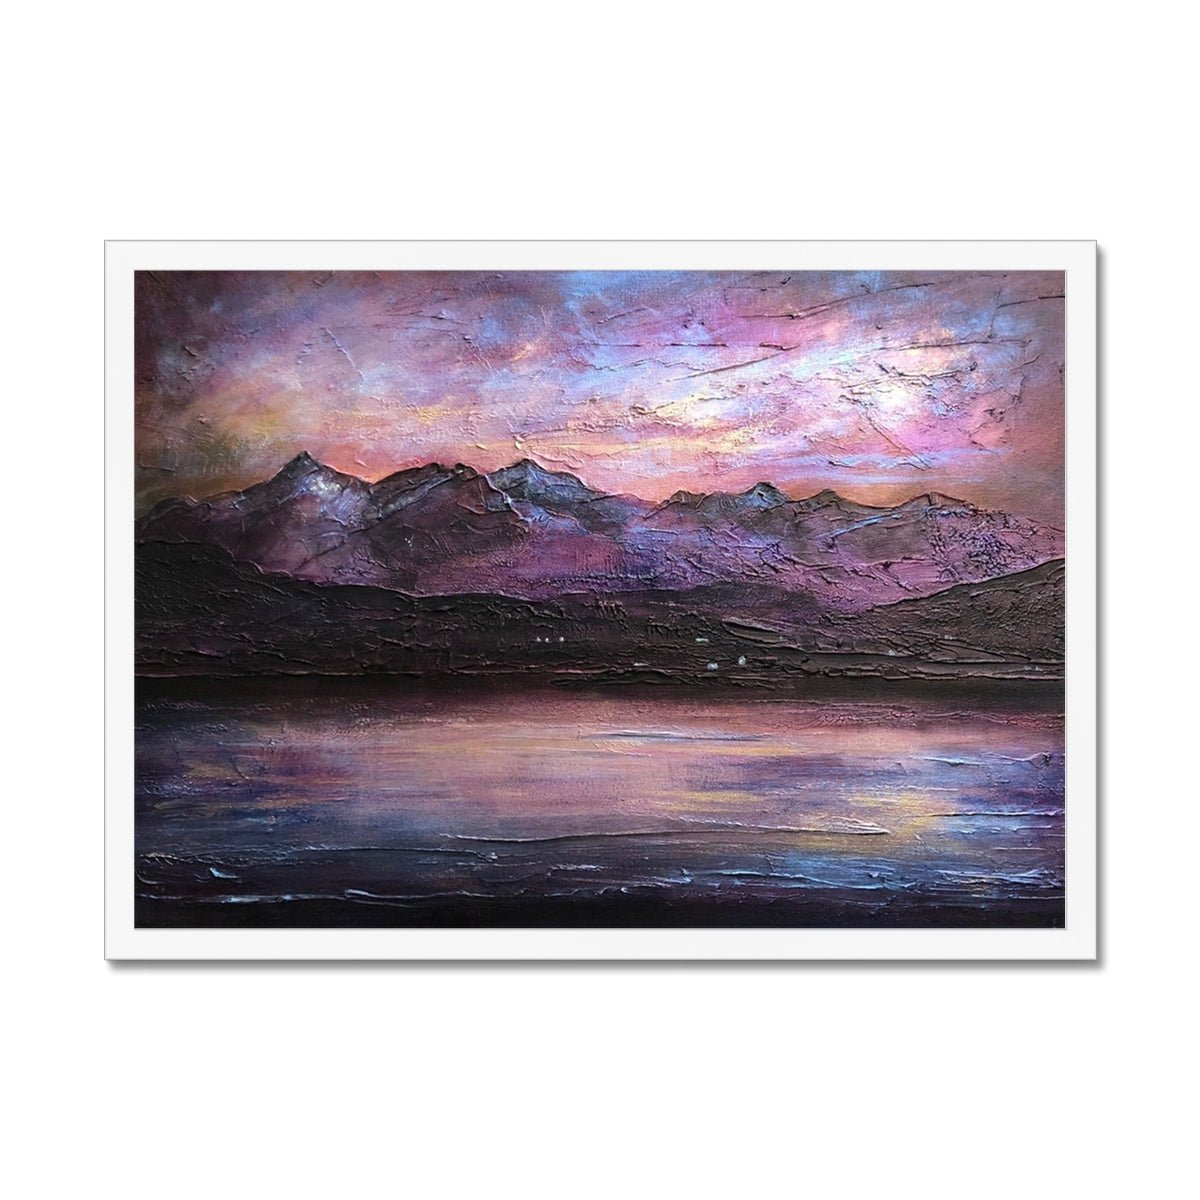 Last Skye Light Painting | Framed Prints From Scotland-Framed Prints-Skye Art Gallery-A2 Landscape-White Frame-Paintings, Prints, Homeware, Art Gifts From Scotland By Scottish Artist Kevin Hunter